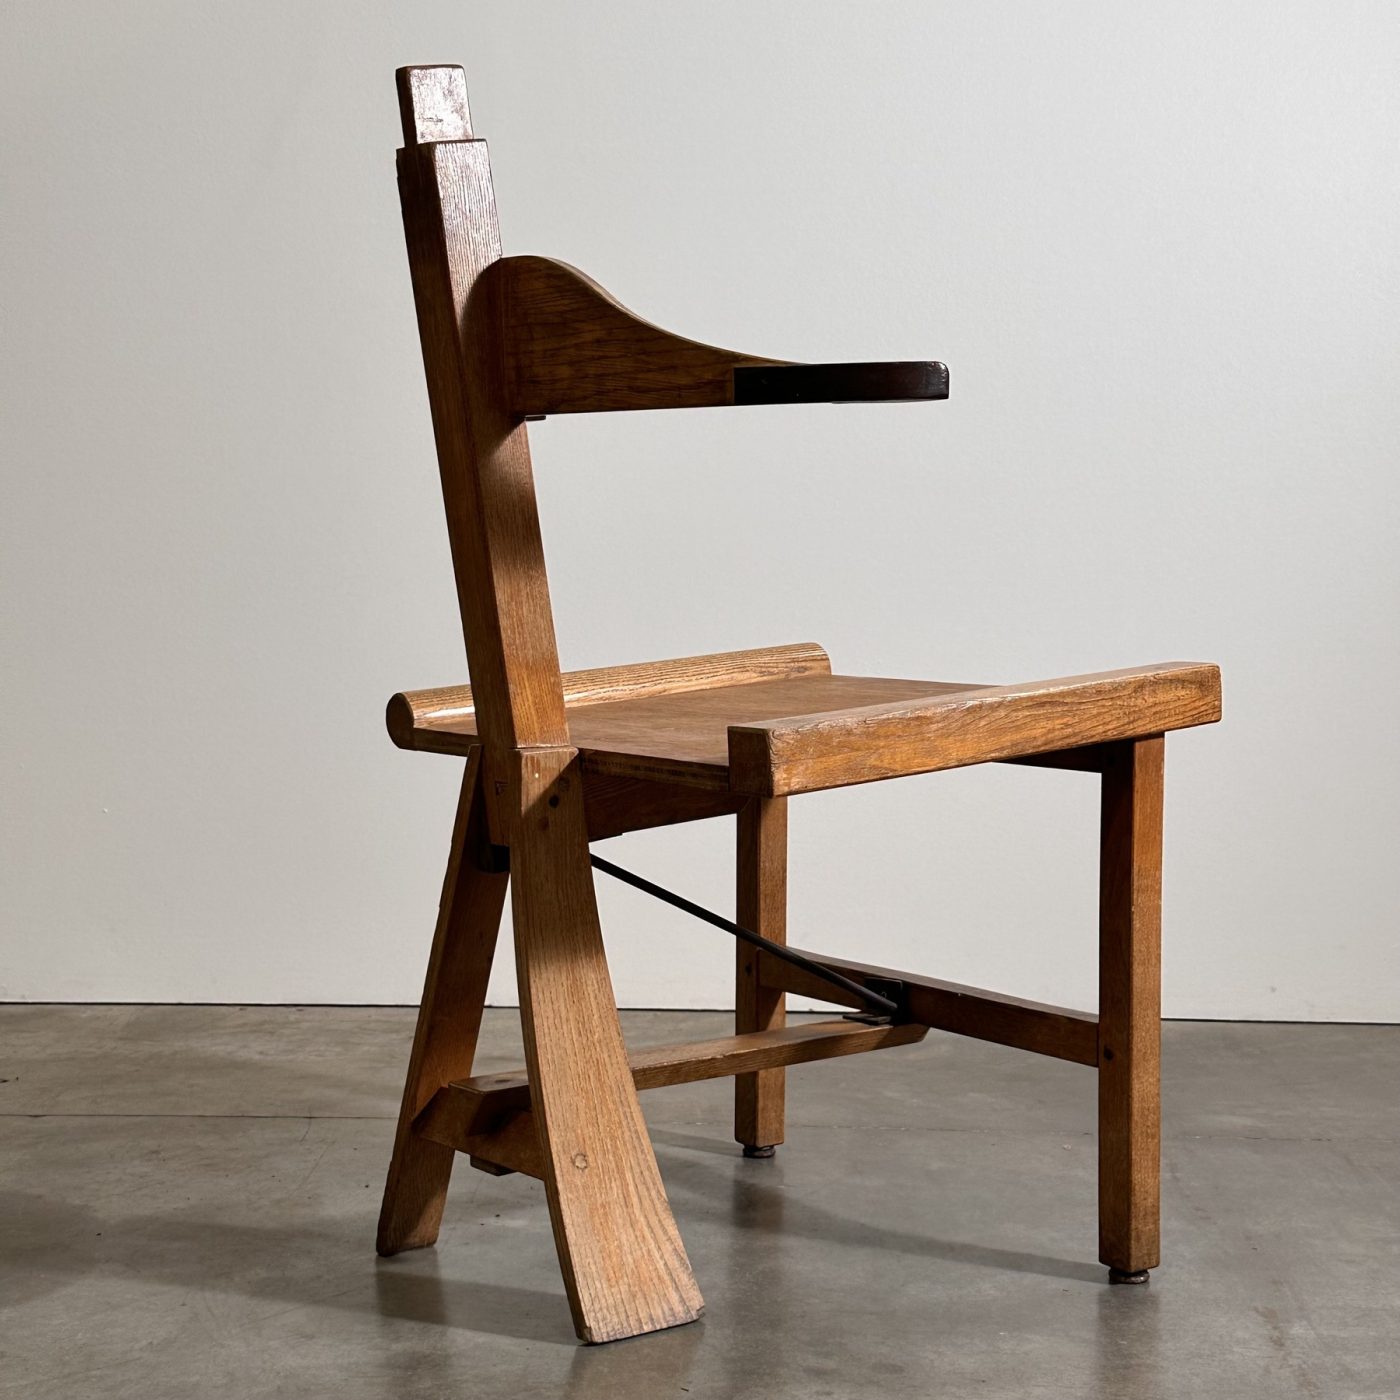 objet-vagabond-curious-chairs0007